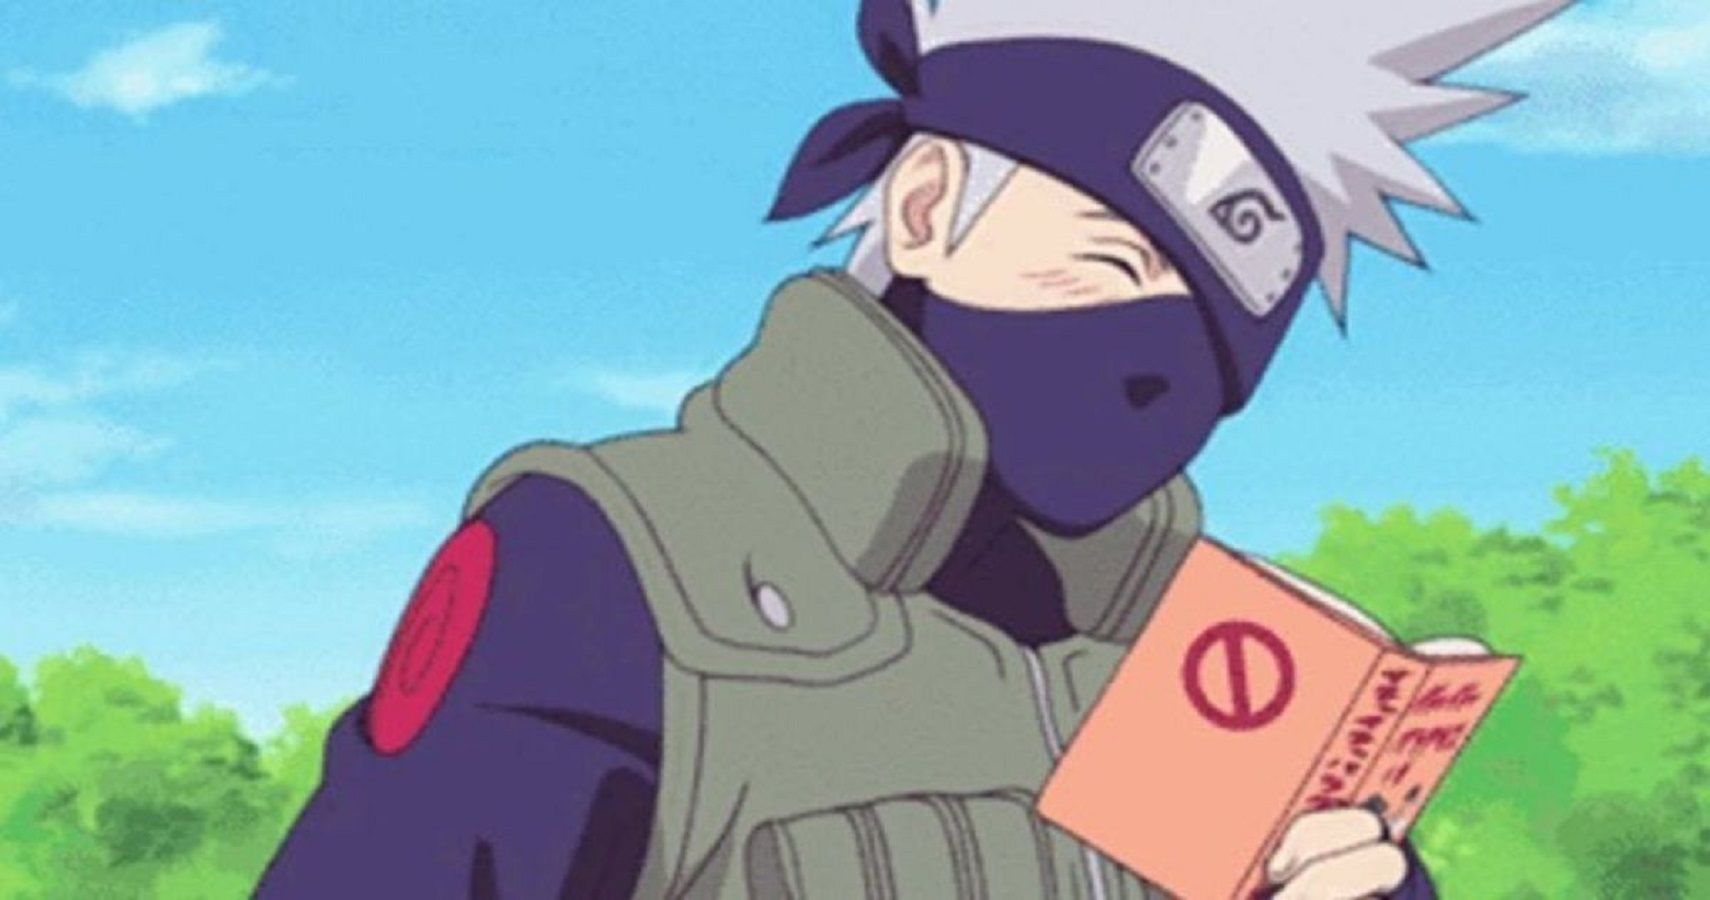 Kakashi Smiling While reading his favorite book, Naruto Shippuden